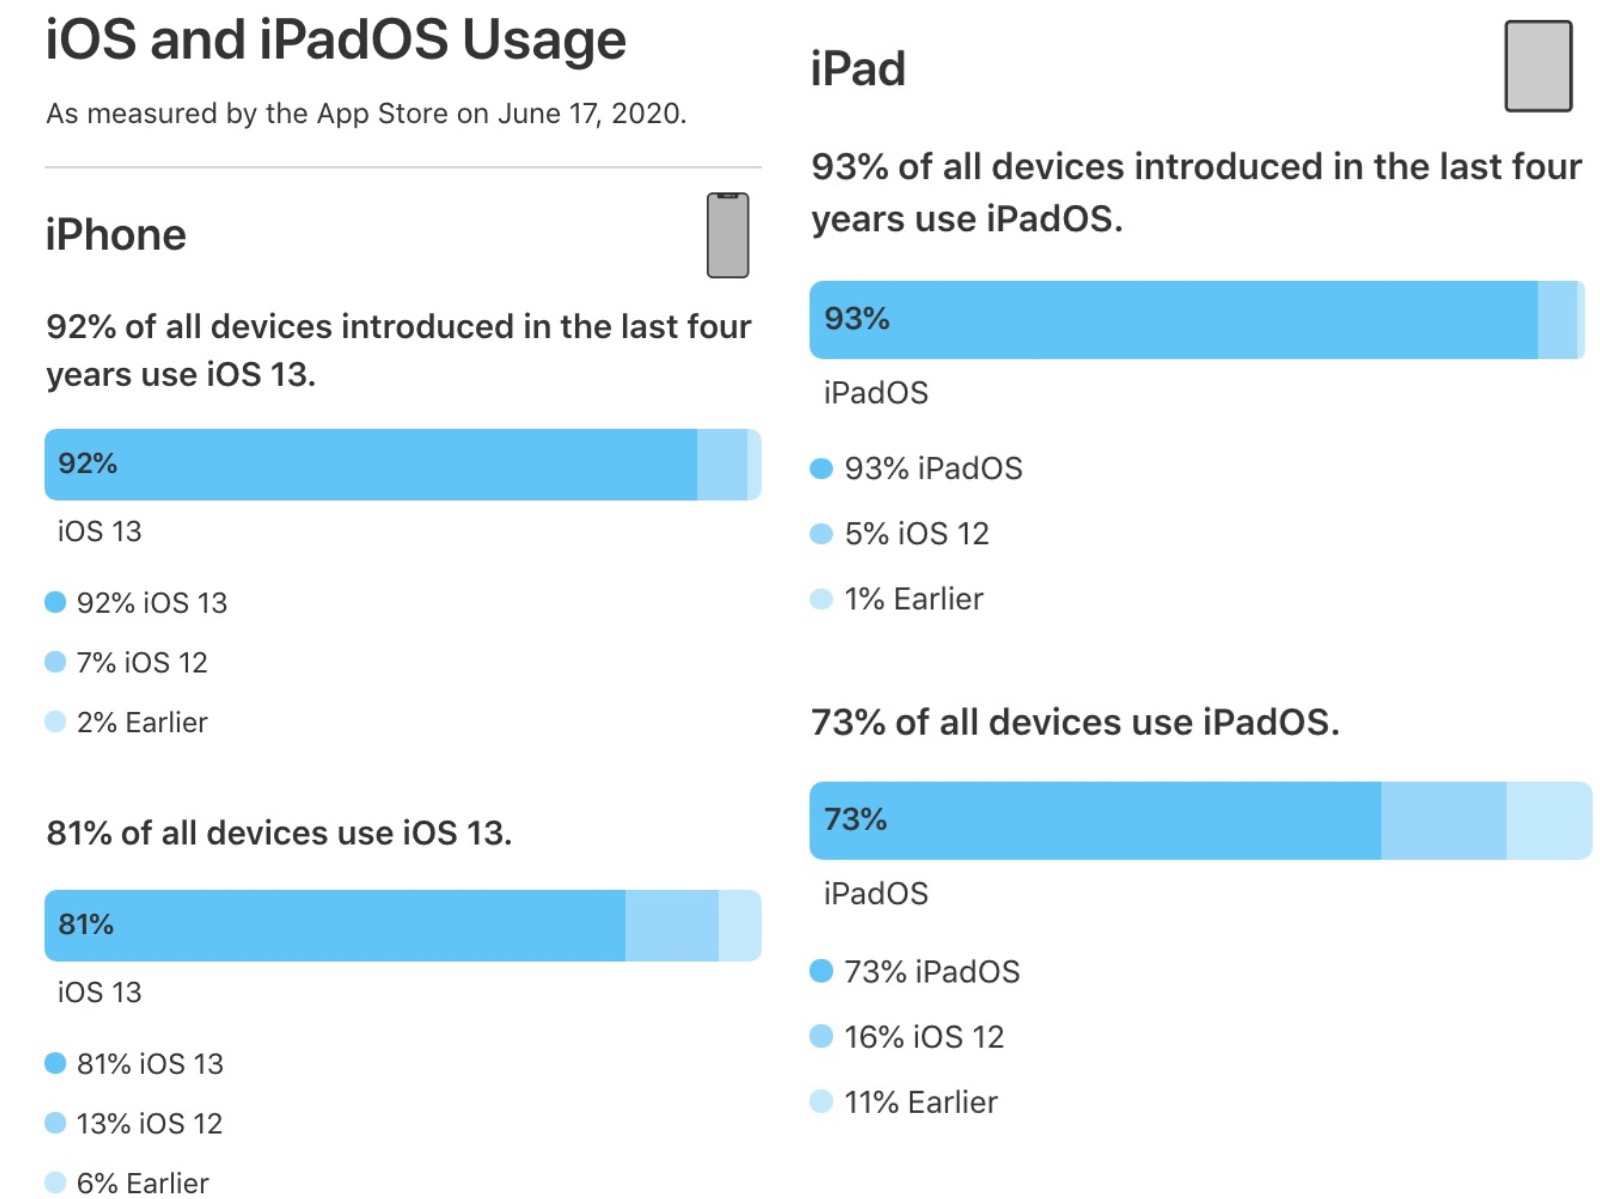 IOS and iPadOS Usage